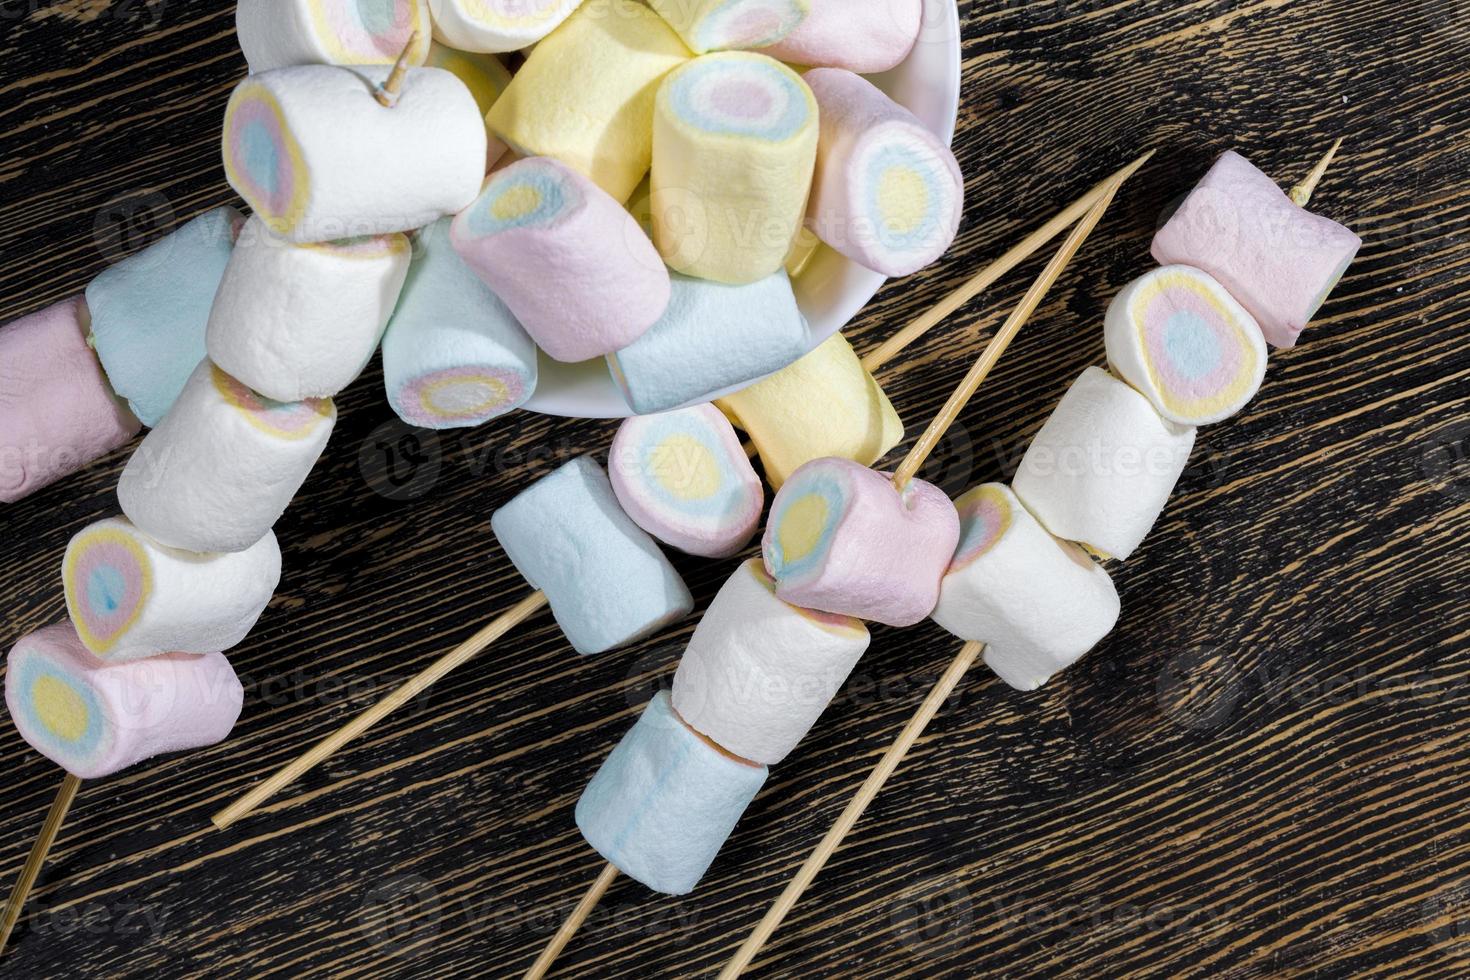 multi colored sweet soft marshmallow photo